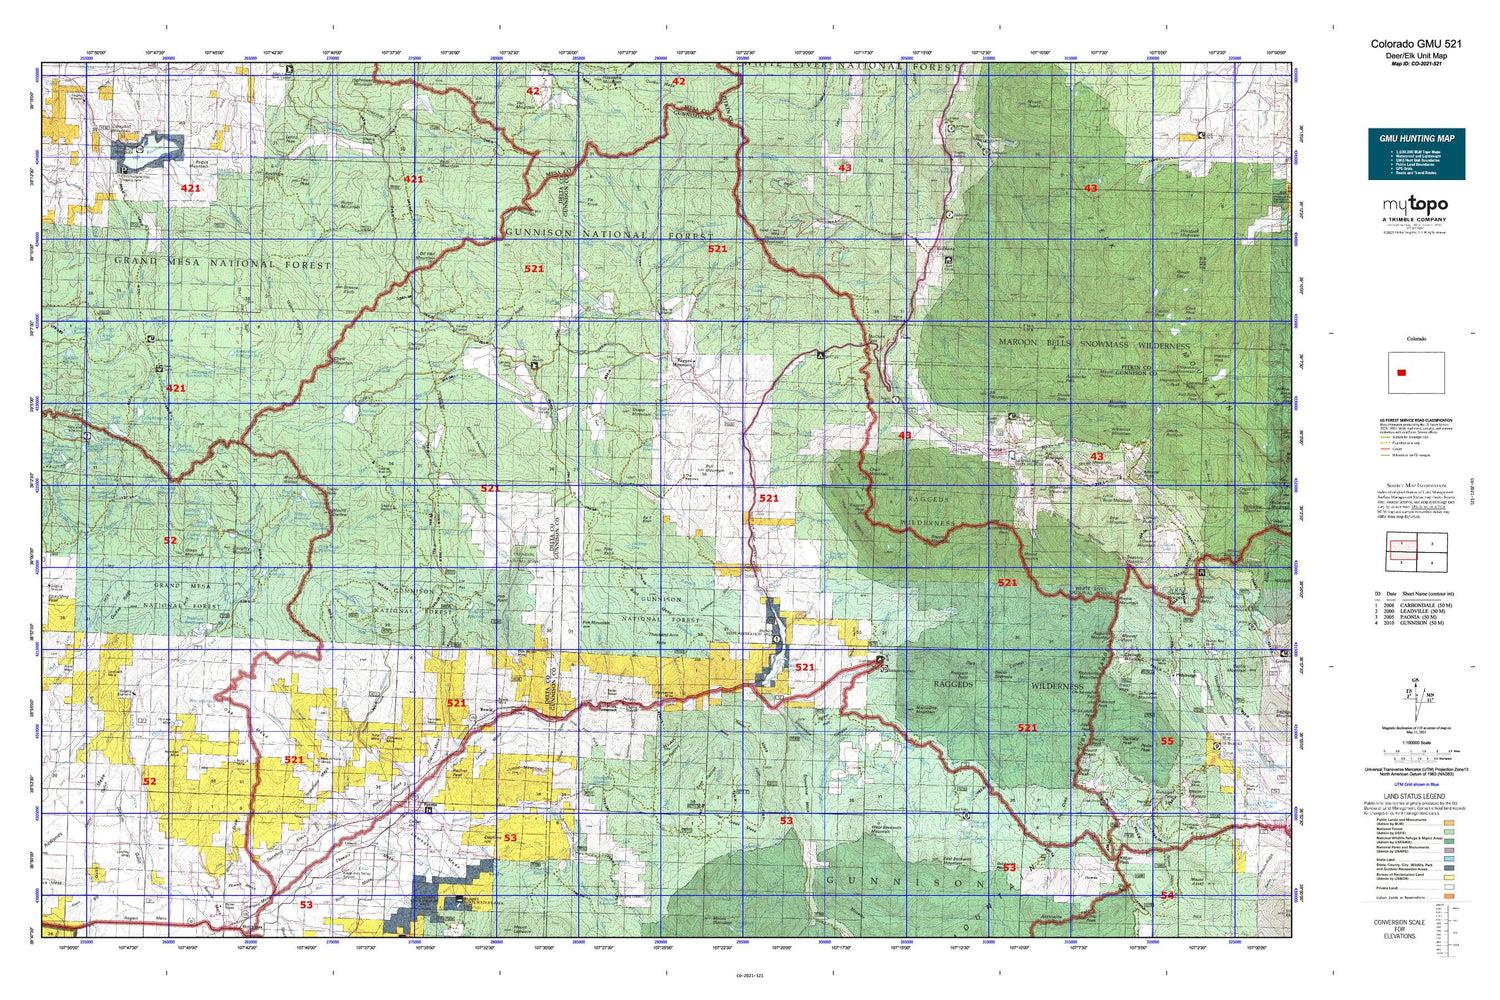 Colorado GMU 521 Map Image